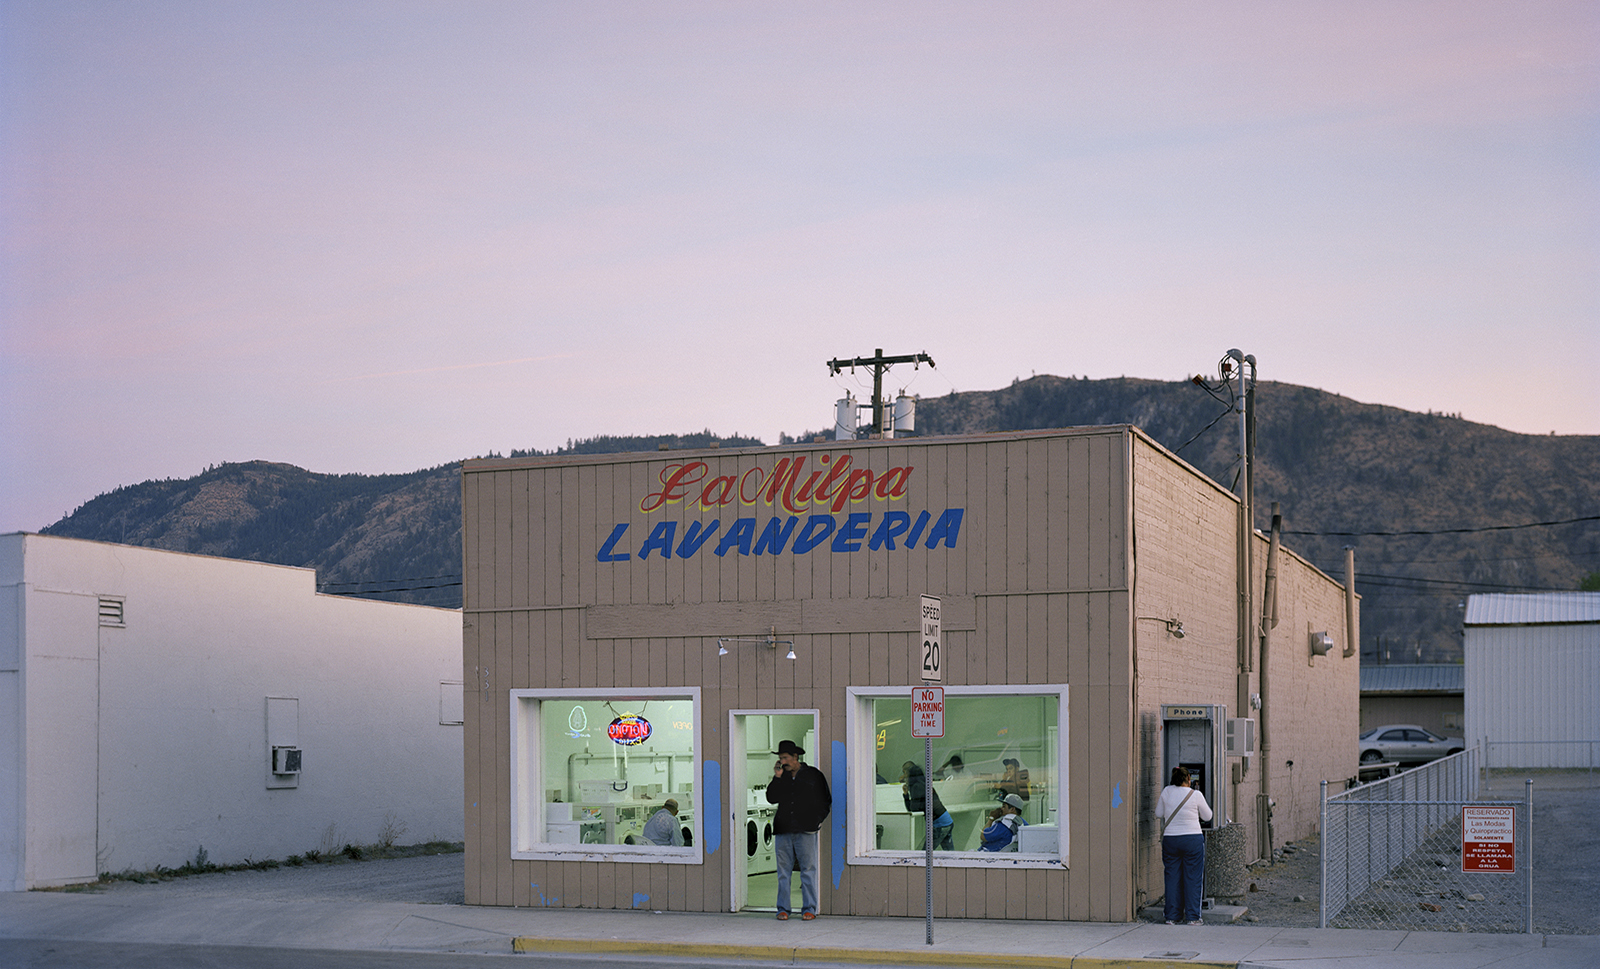 Kathya Maria Landeros, Main Street Laundromat, Eastern Washington, 2012. From the series West.